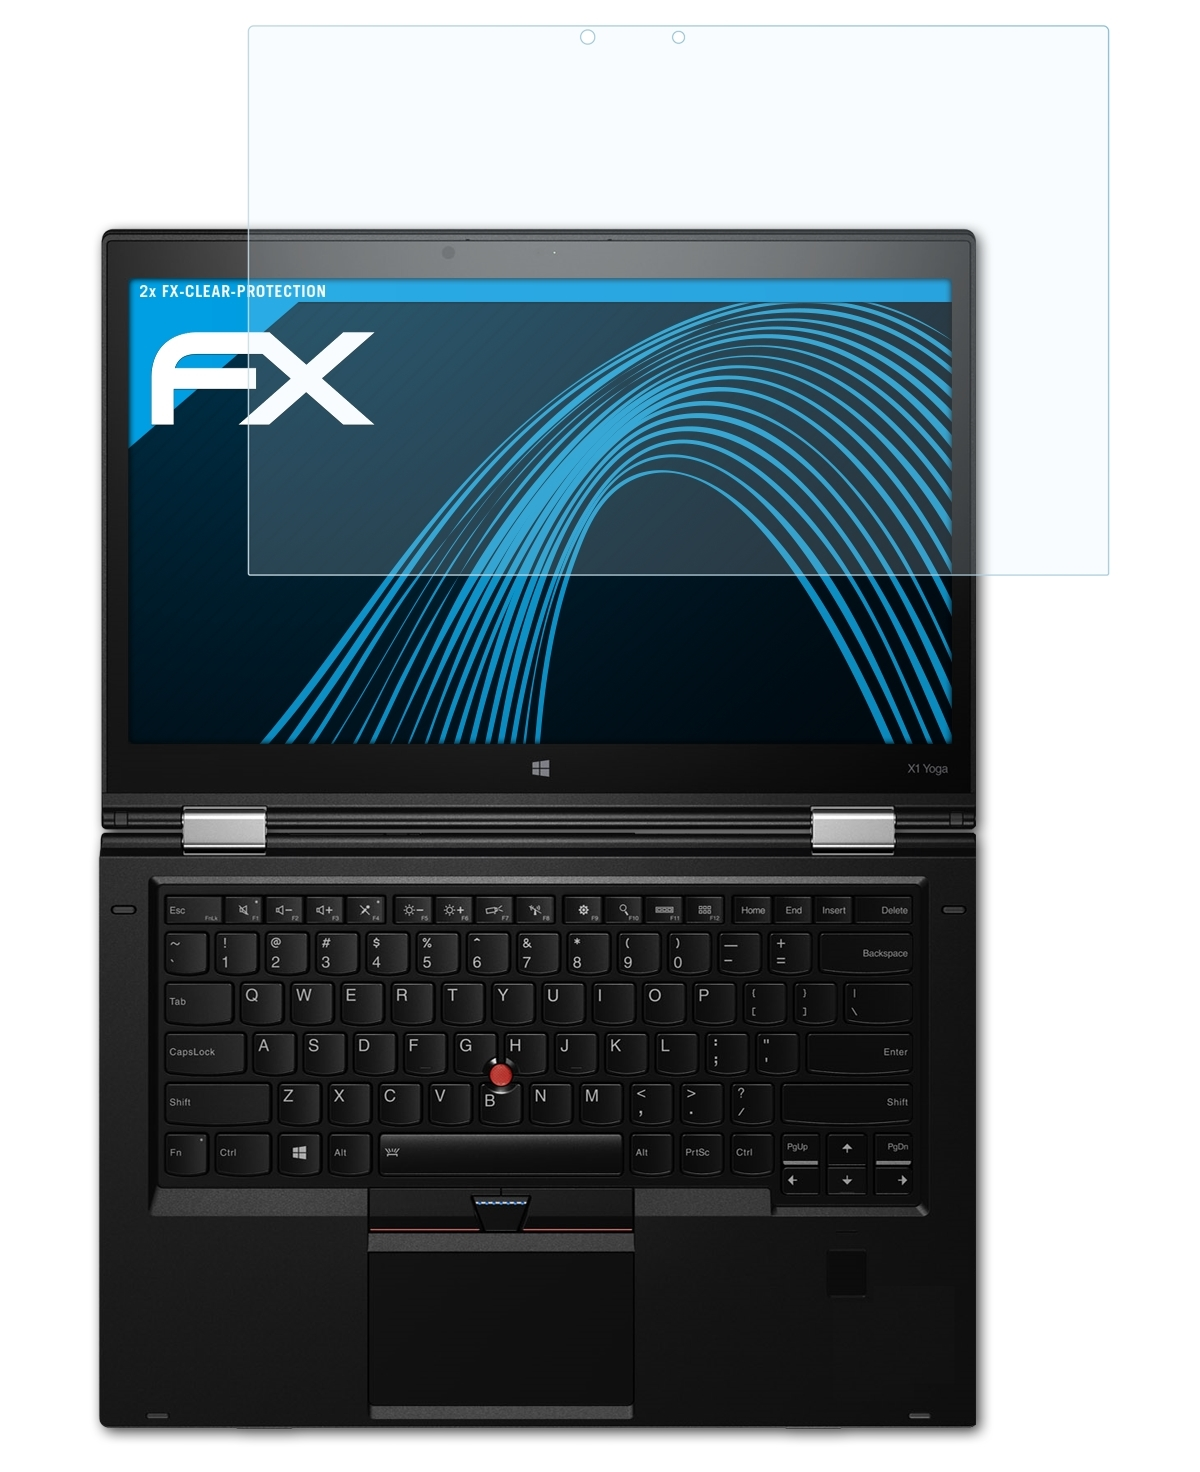 ATFOLIX 2x Gen. Displayschutz(für X1 Lenovo FX-Clear 2016)) ThinkPad (1st Yoga